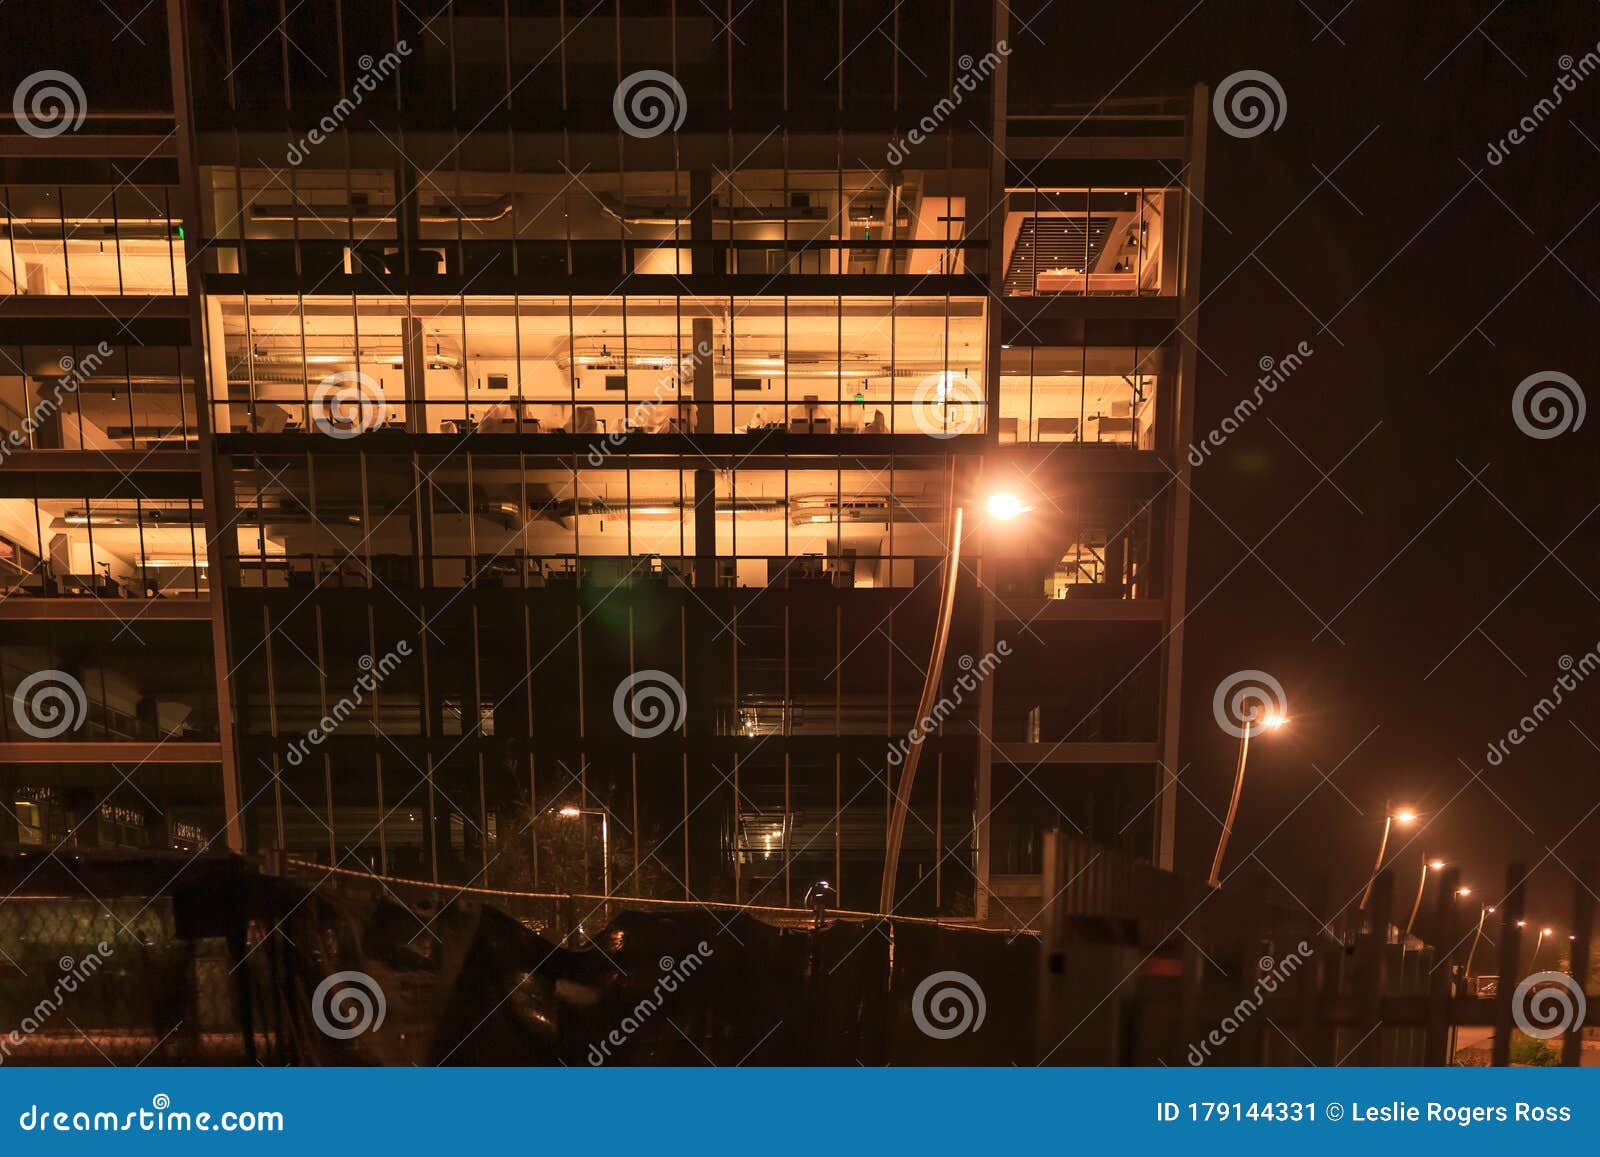 several stories of windowed office building lit